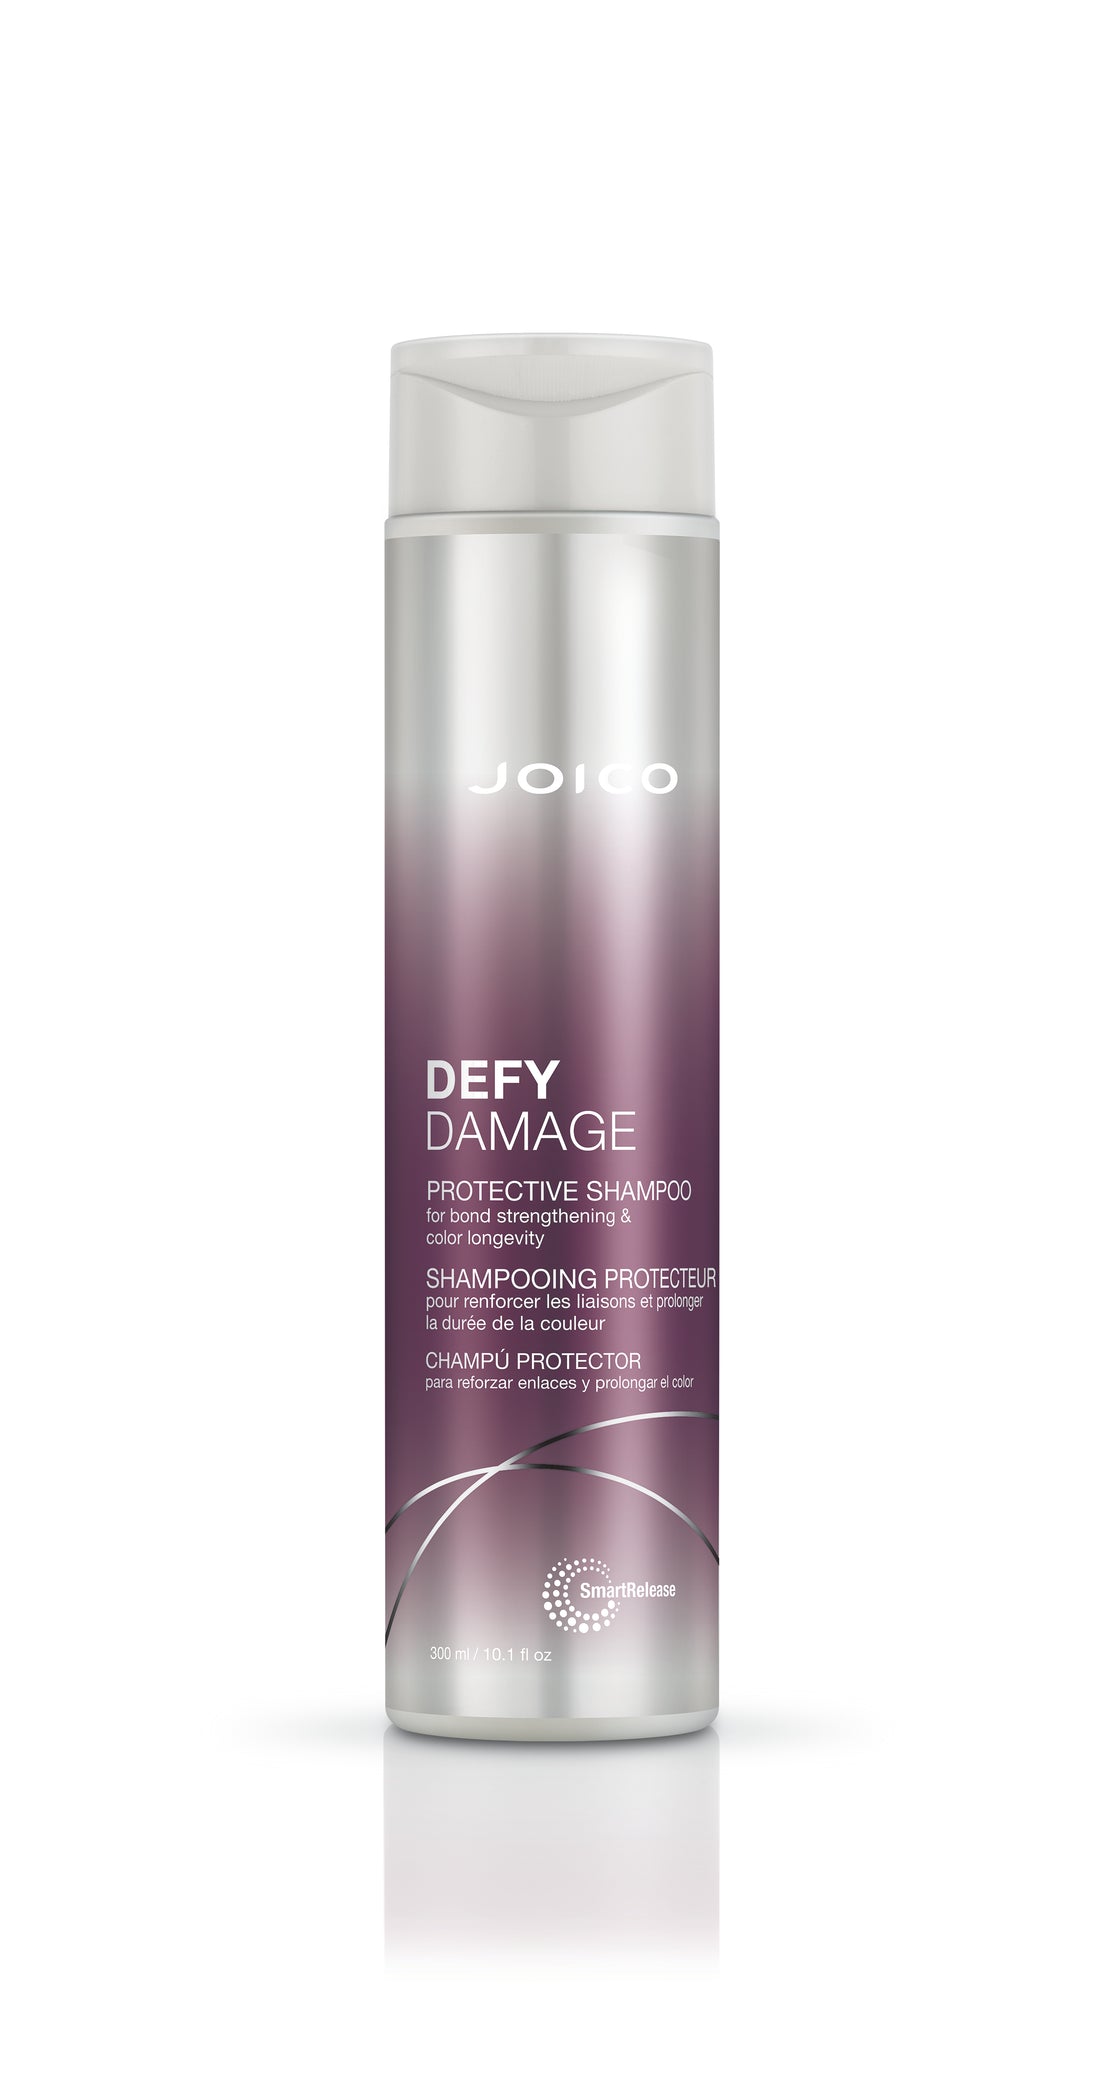 Joico Defy damage shampoo